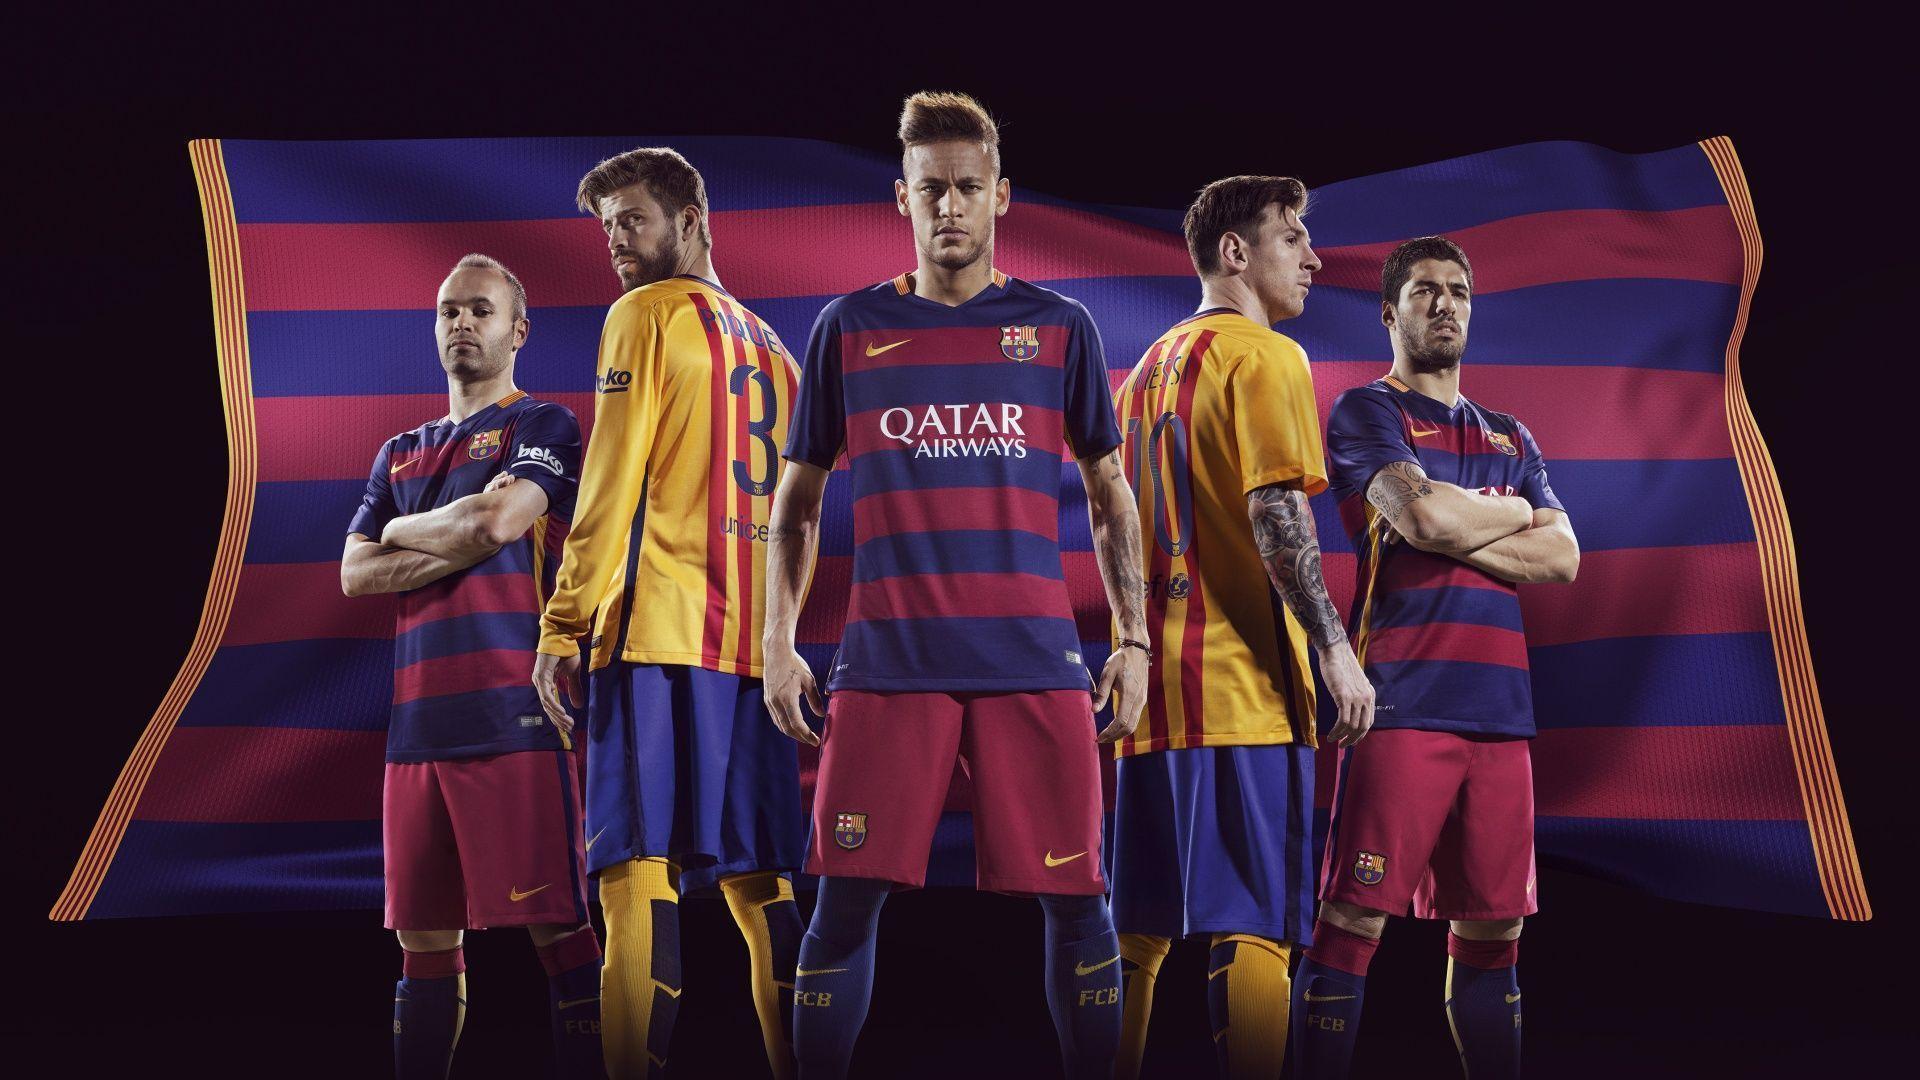 gambar wallpaper barcelona,team,player,youth,football player,uniform